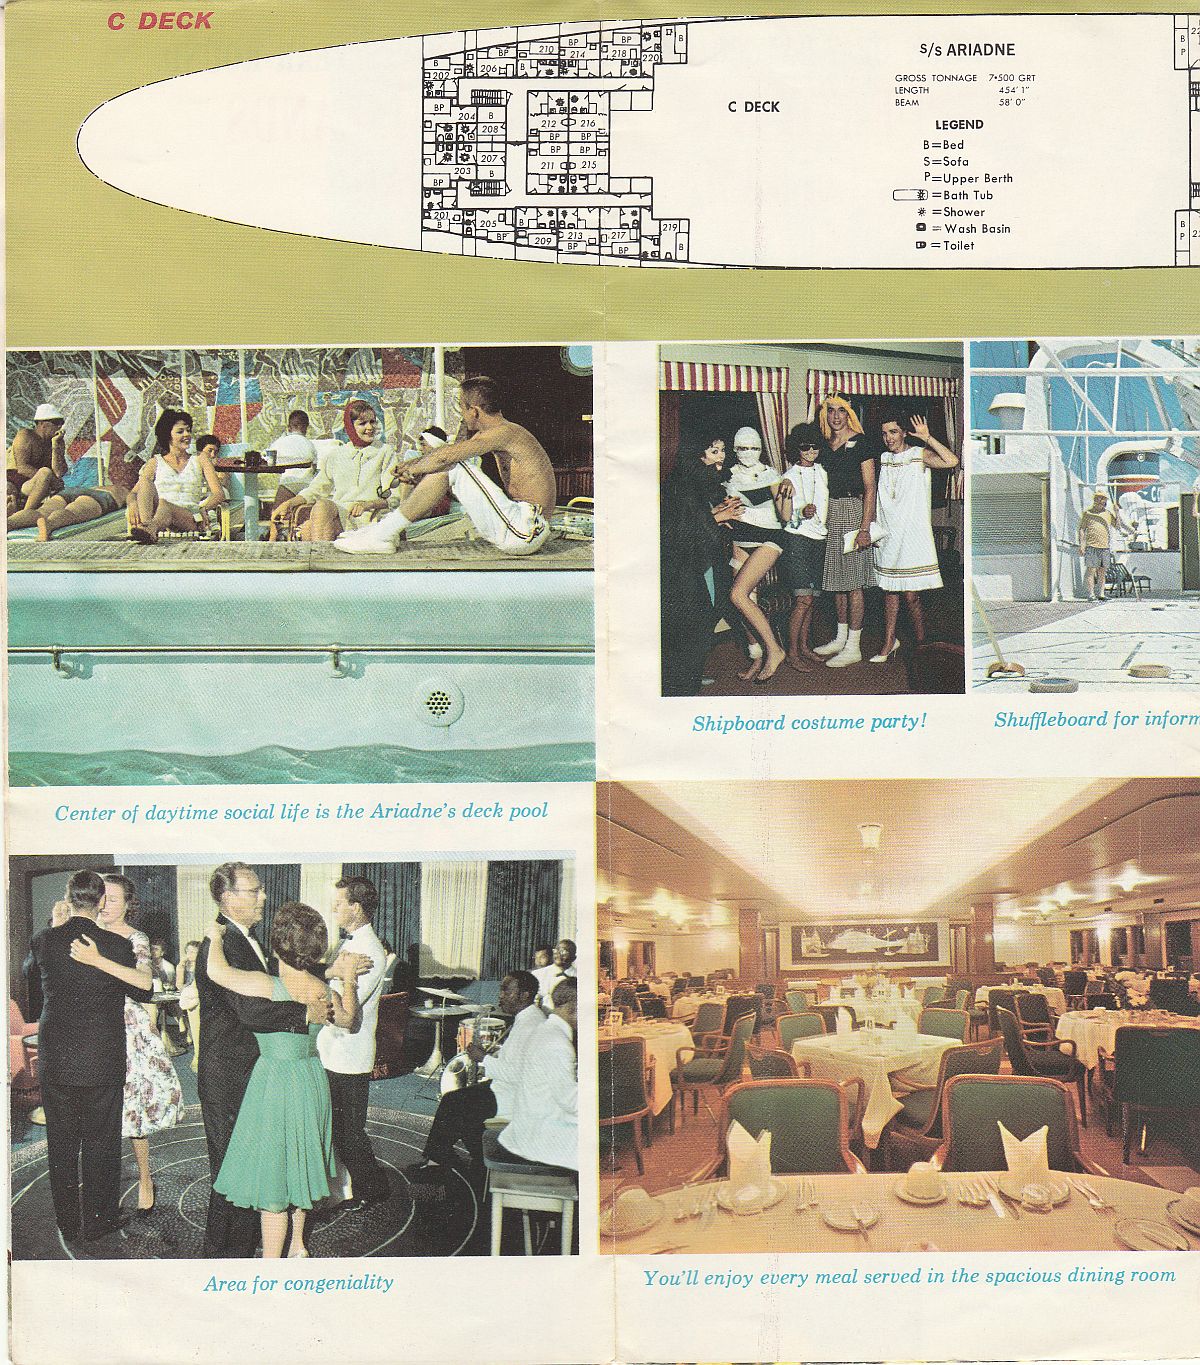 ss Ariadne Deck plan (cont'd) & ship photos: C-Deck aft; Photos of pool, dining room, costume party, etc.